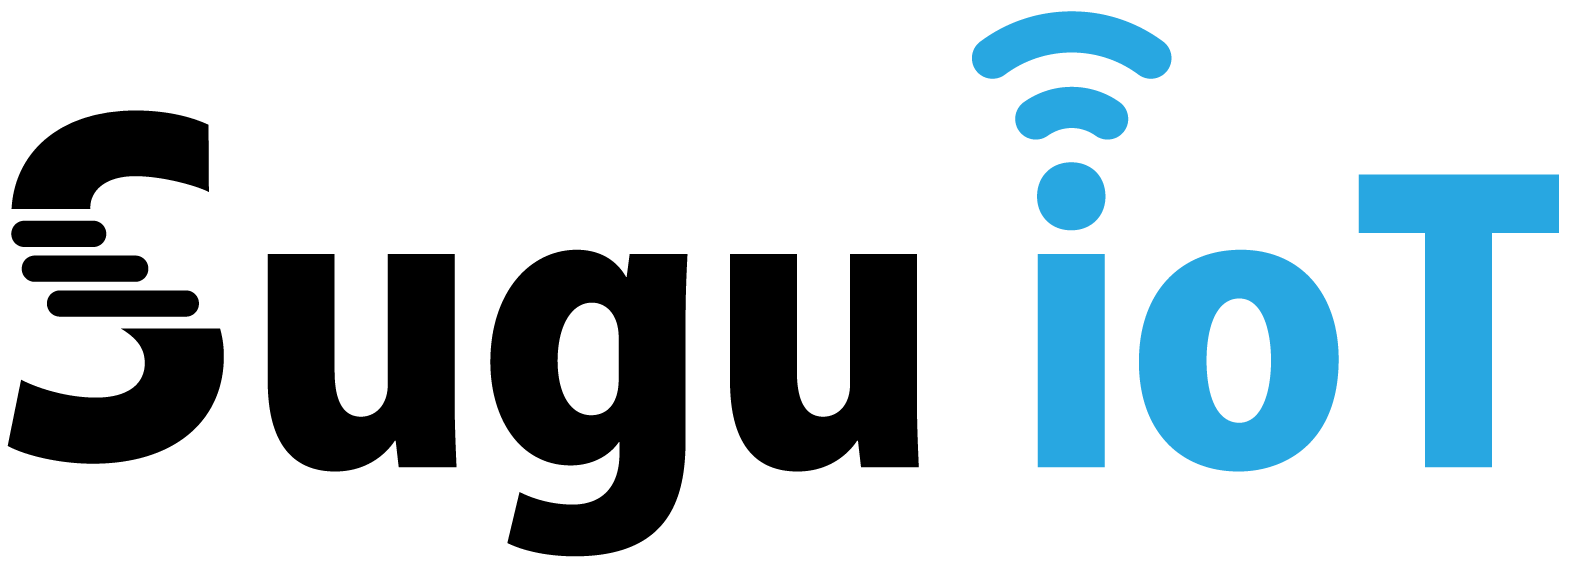 Suguiot logo